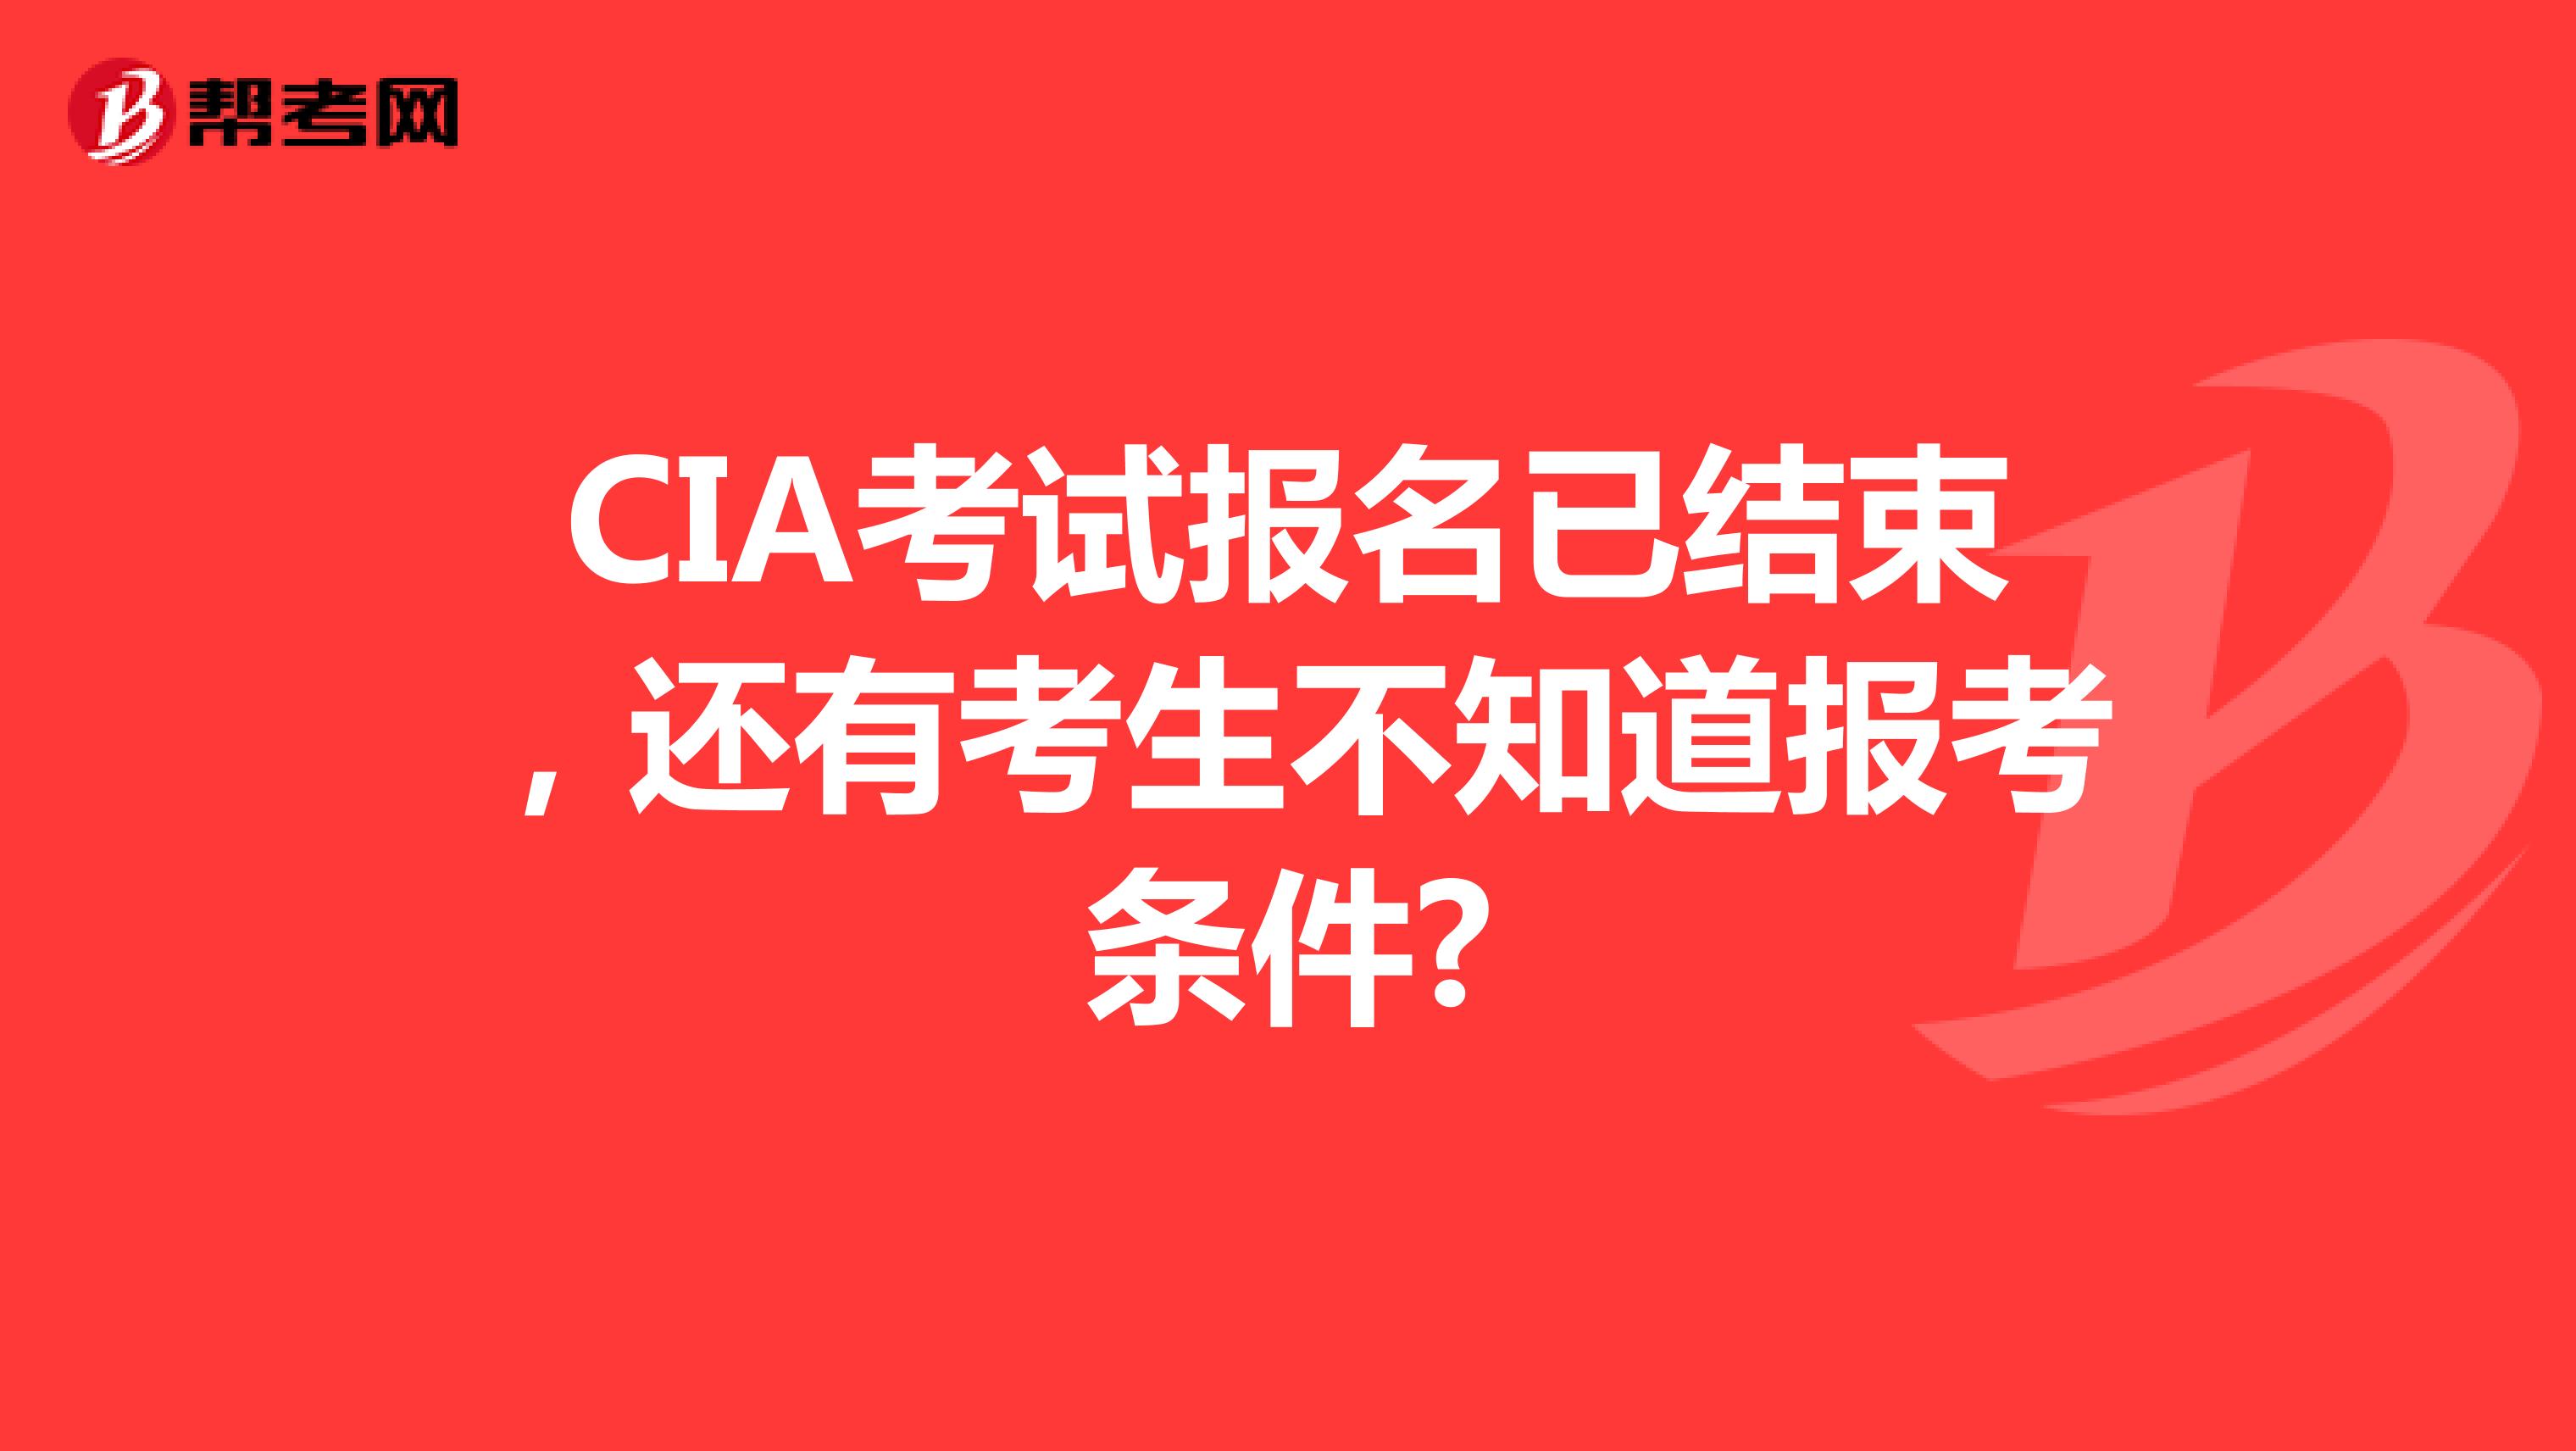 CIA考试报名已结束，还有考生不知道报考条件?